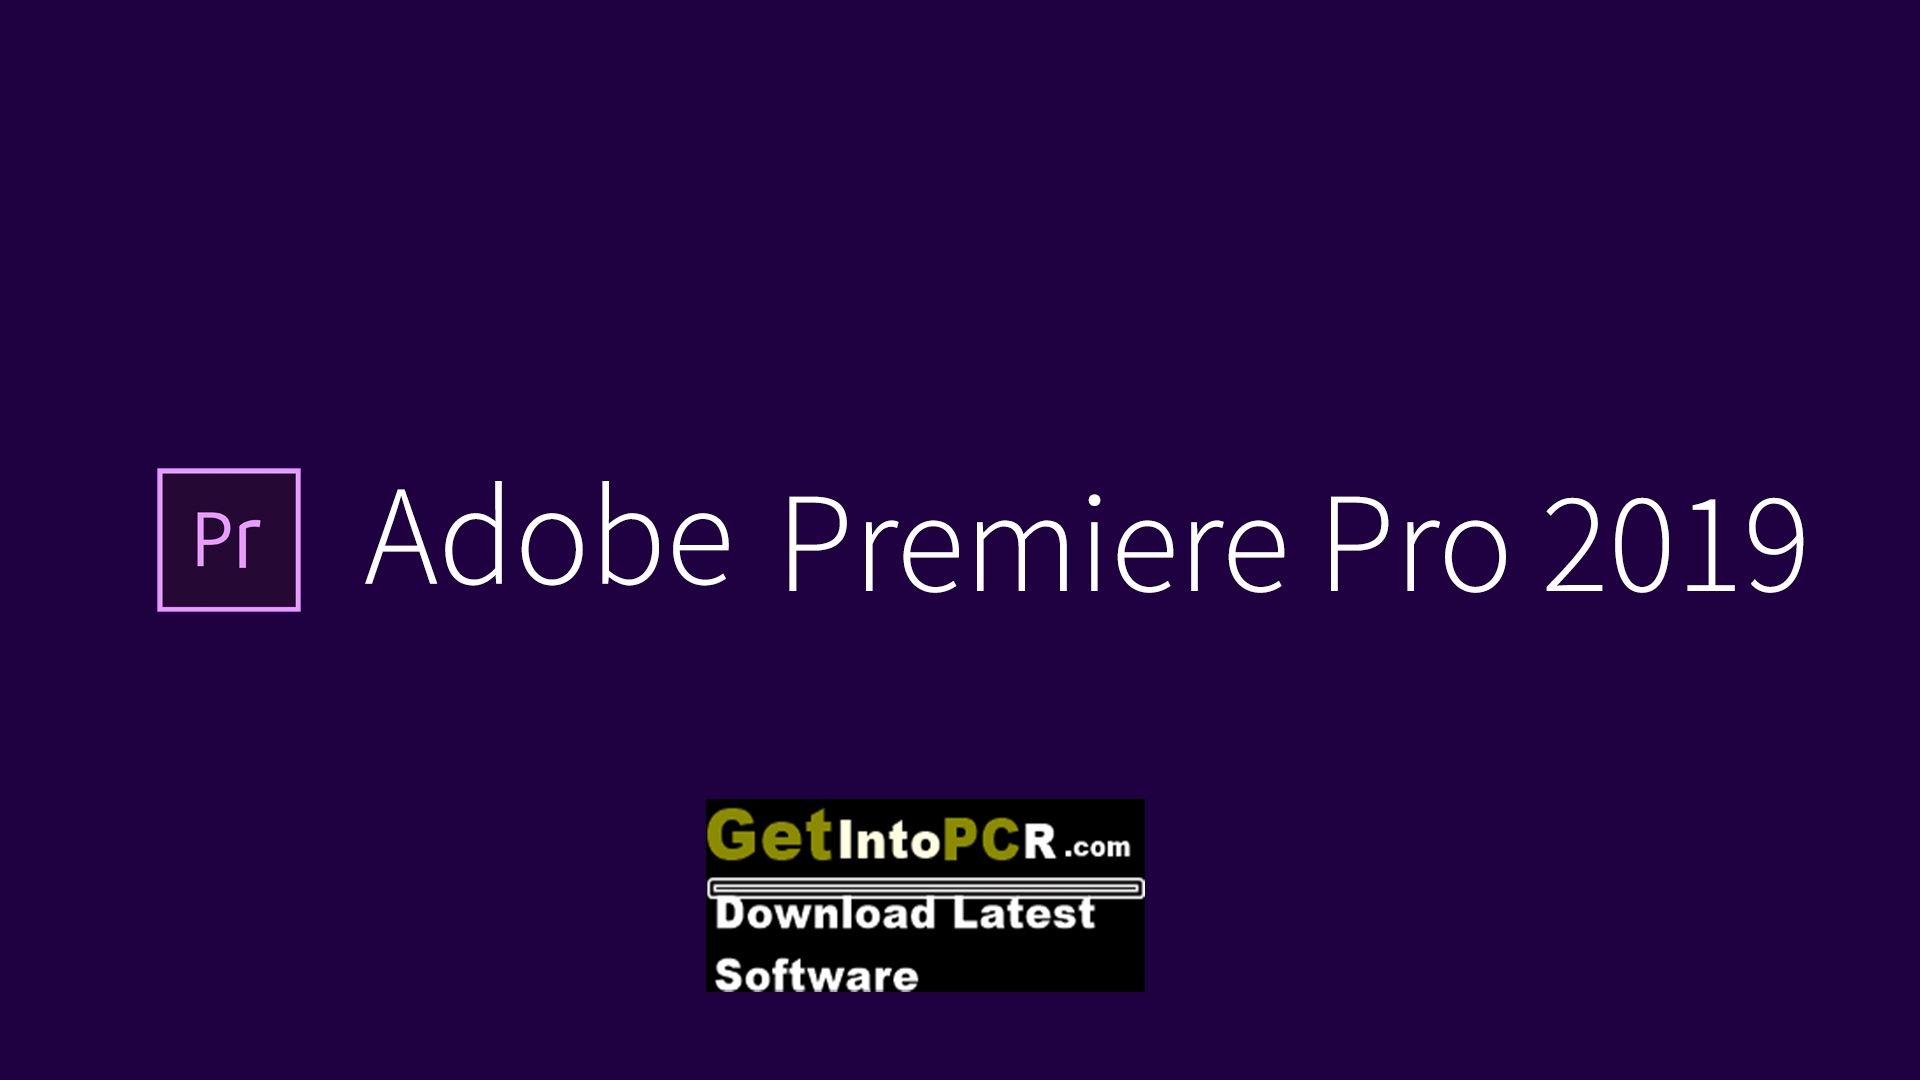 Adobe Premiere Pro CC 2019 Free Download Full Version [32 ...